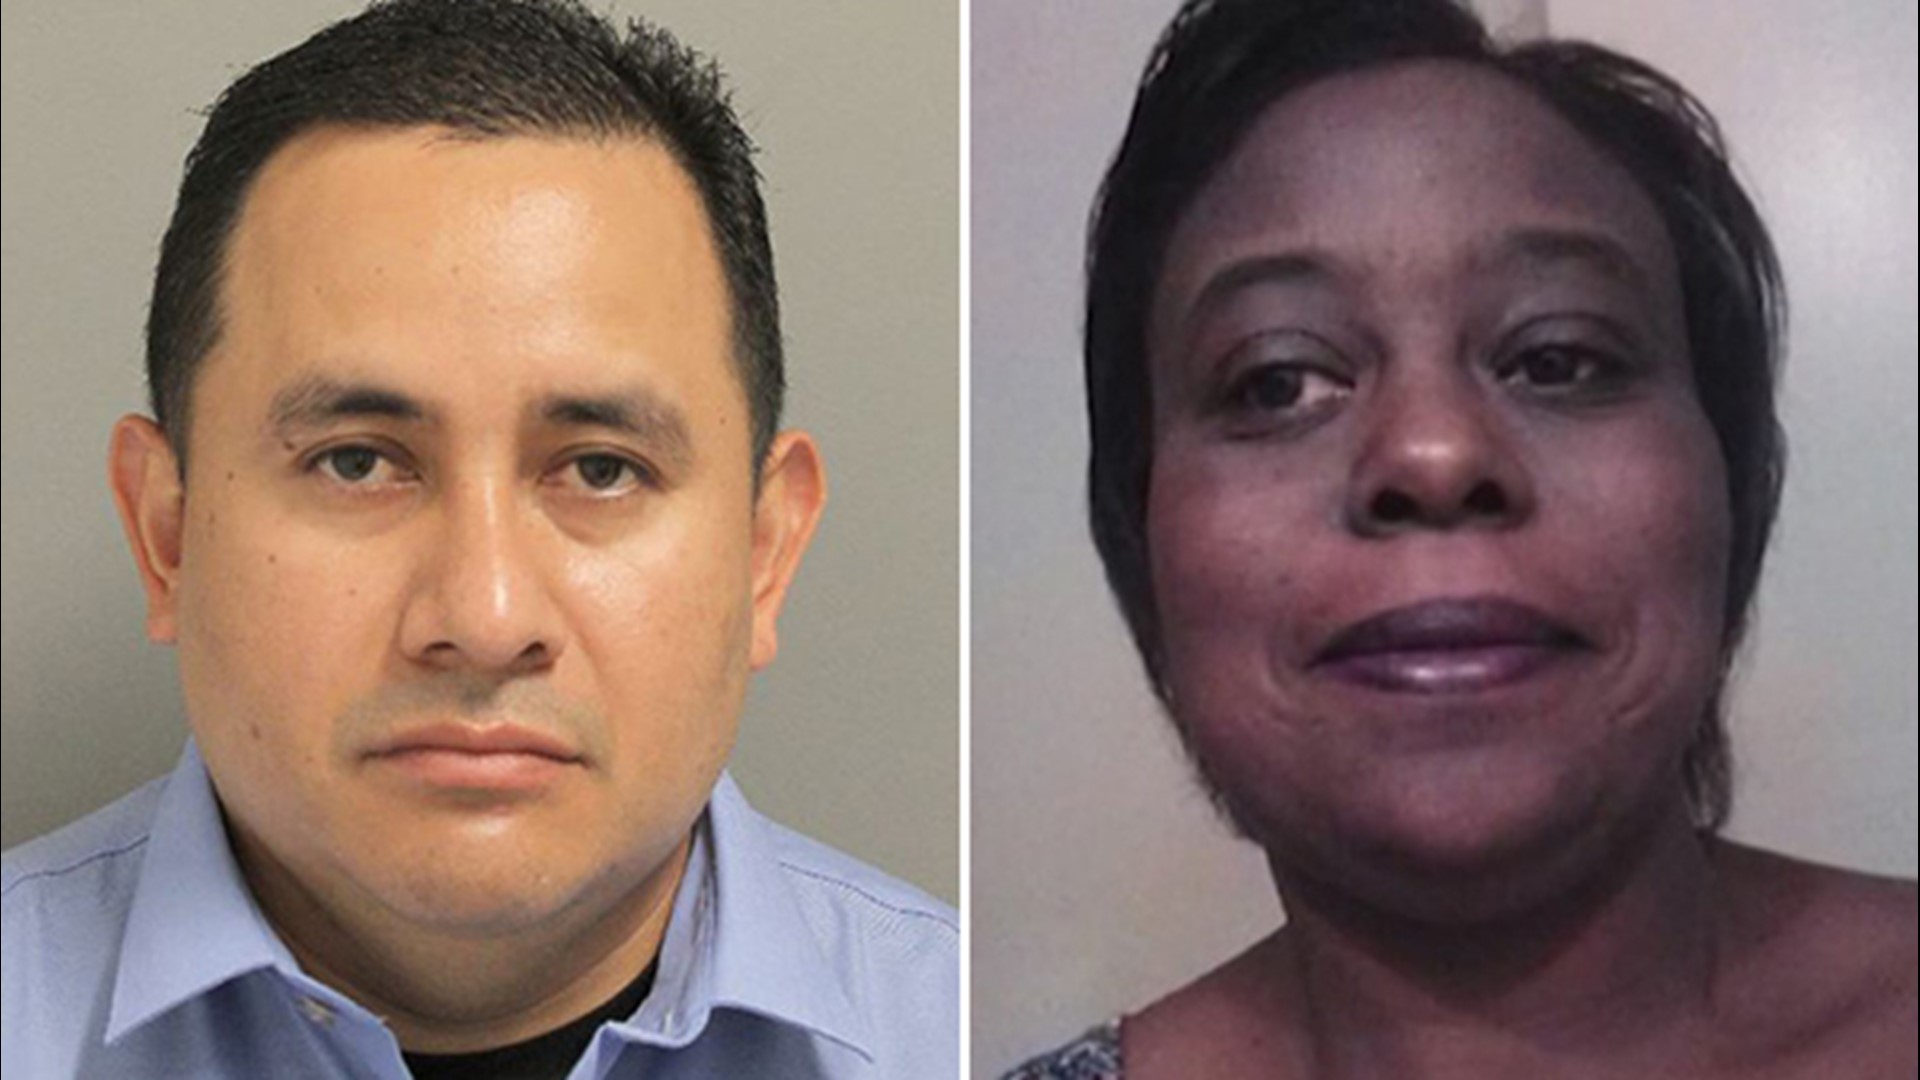 Juan Delacruz shot Pamela Turner five times in 2019 after trying to arrest her for outstanding warrants. She grabbed his Taser and used it on him before he shot her.